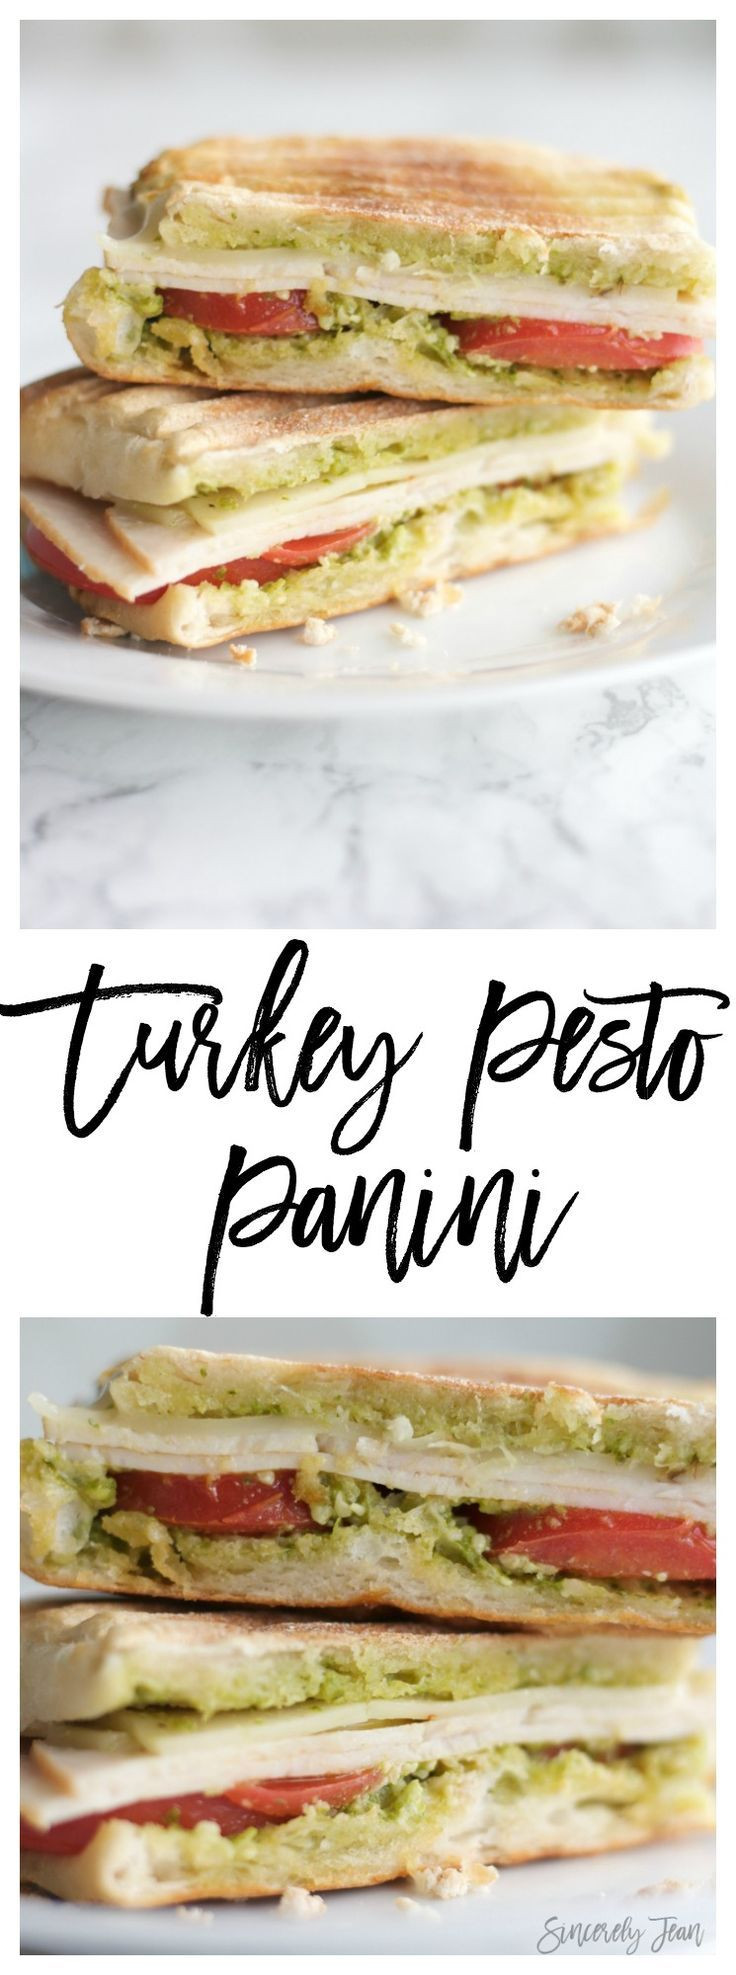 Turkey Panini Sandwiches Recipe
 Turkey Pesto Panini